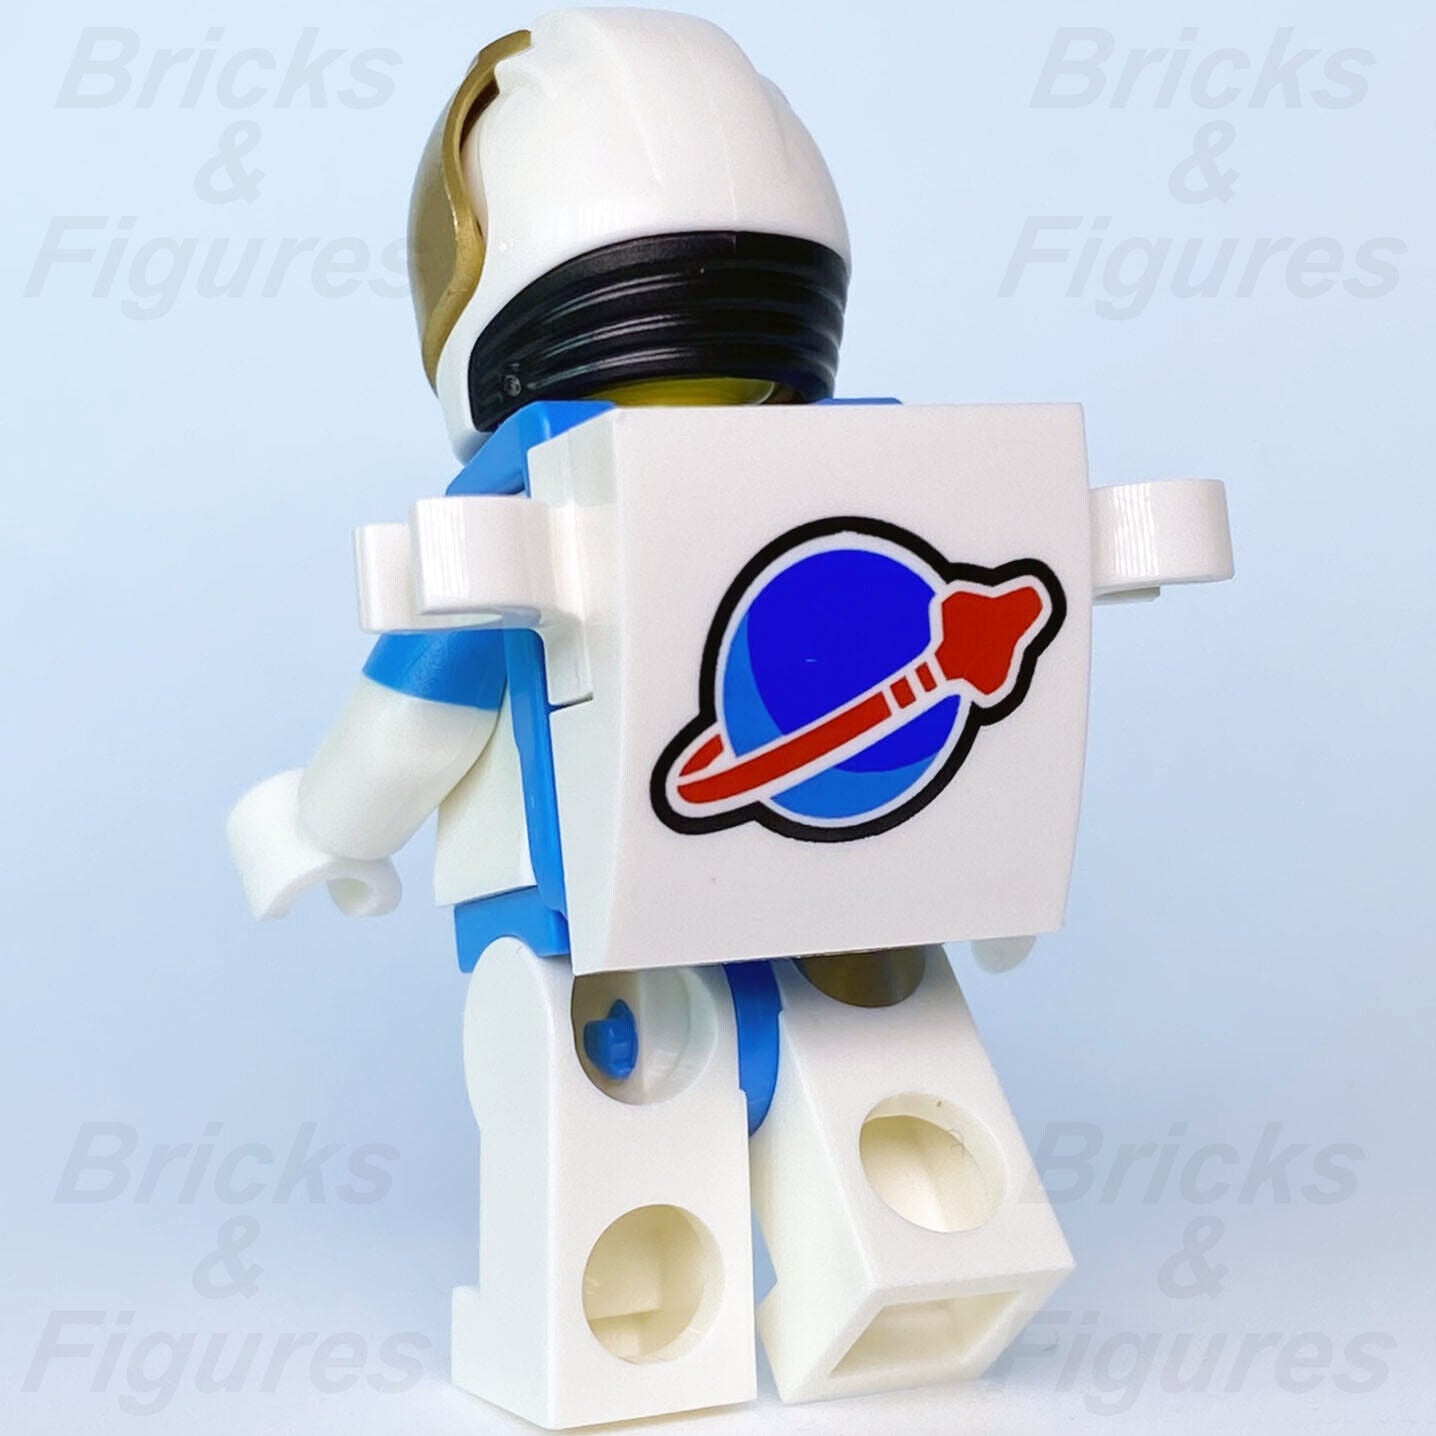 Town LEGO Lunar Research Astronaut Female Space Port Minifigure 60350 cty1409 - Bricks & Figures